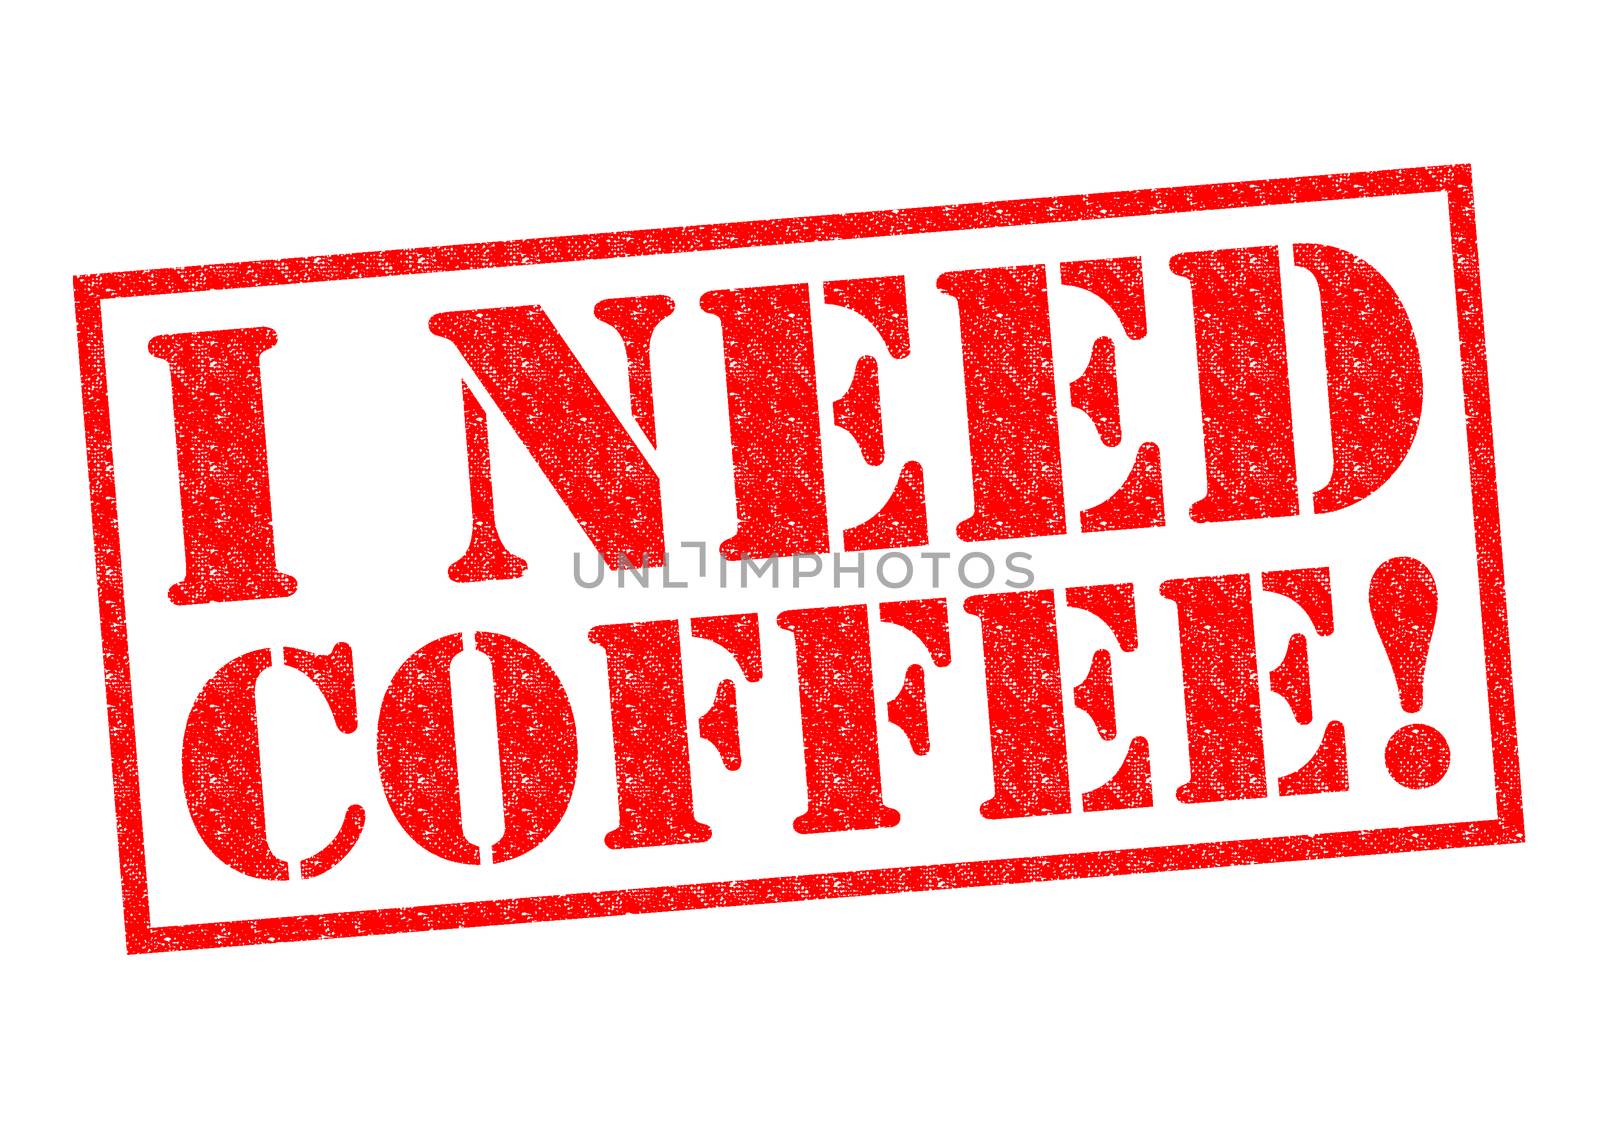 I NEED COFFEE by chrisdorney